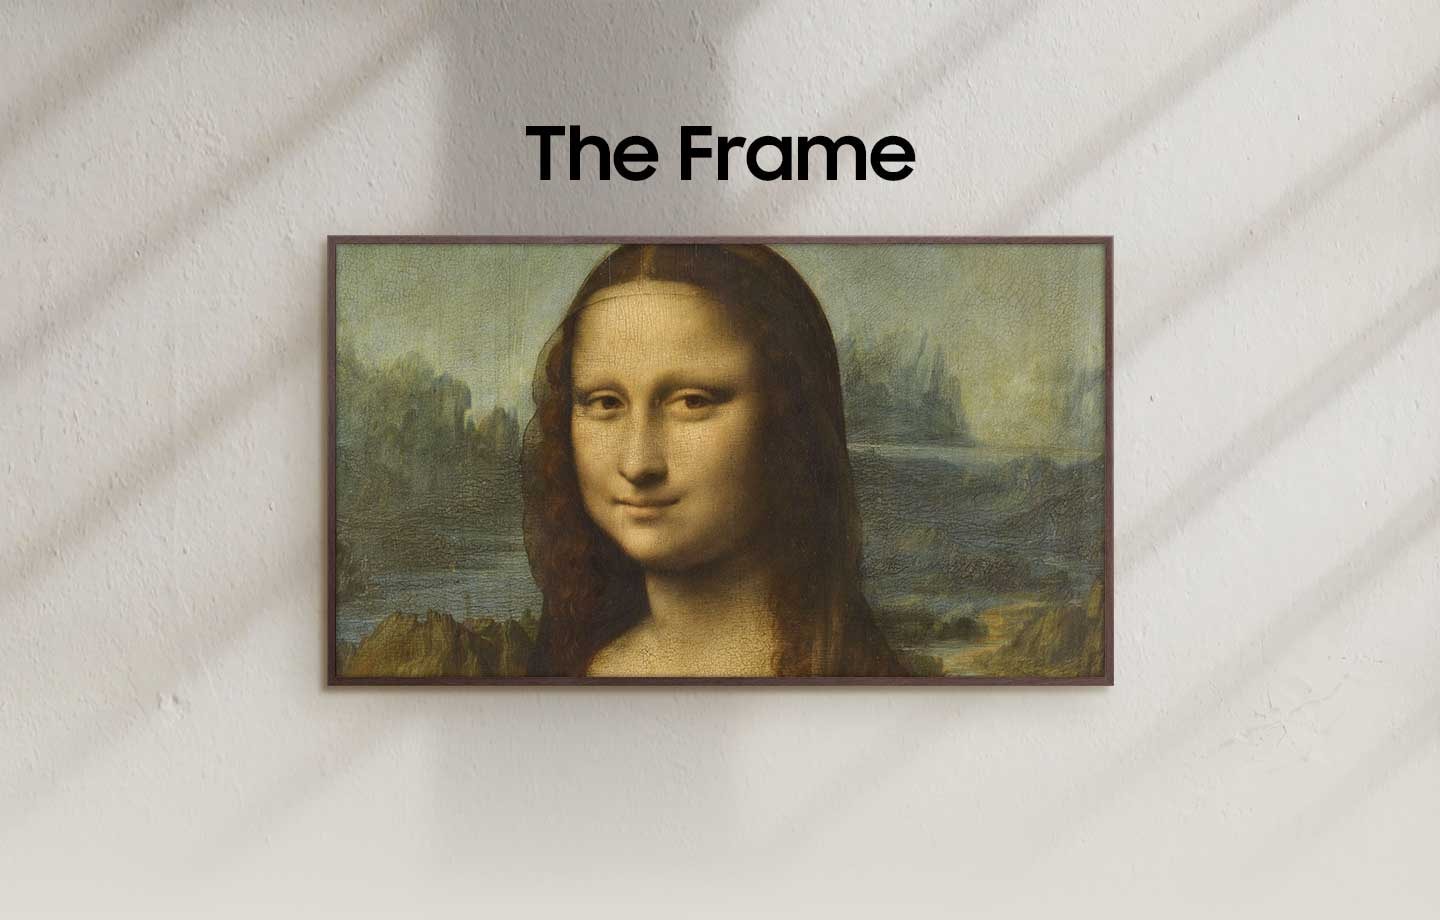 The Frame zeigt Mona Lisa auf dem Display.